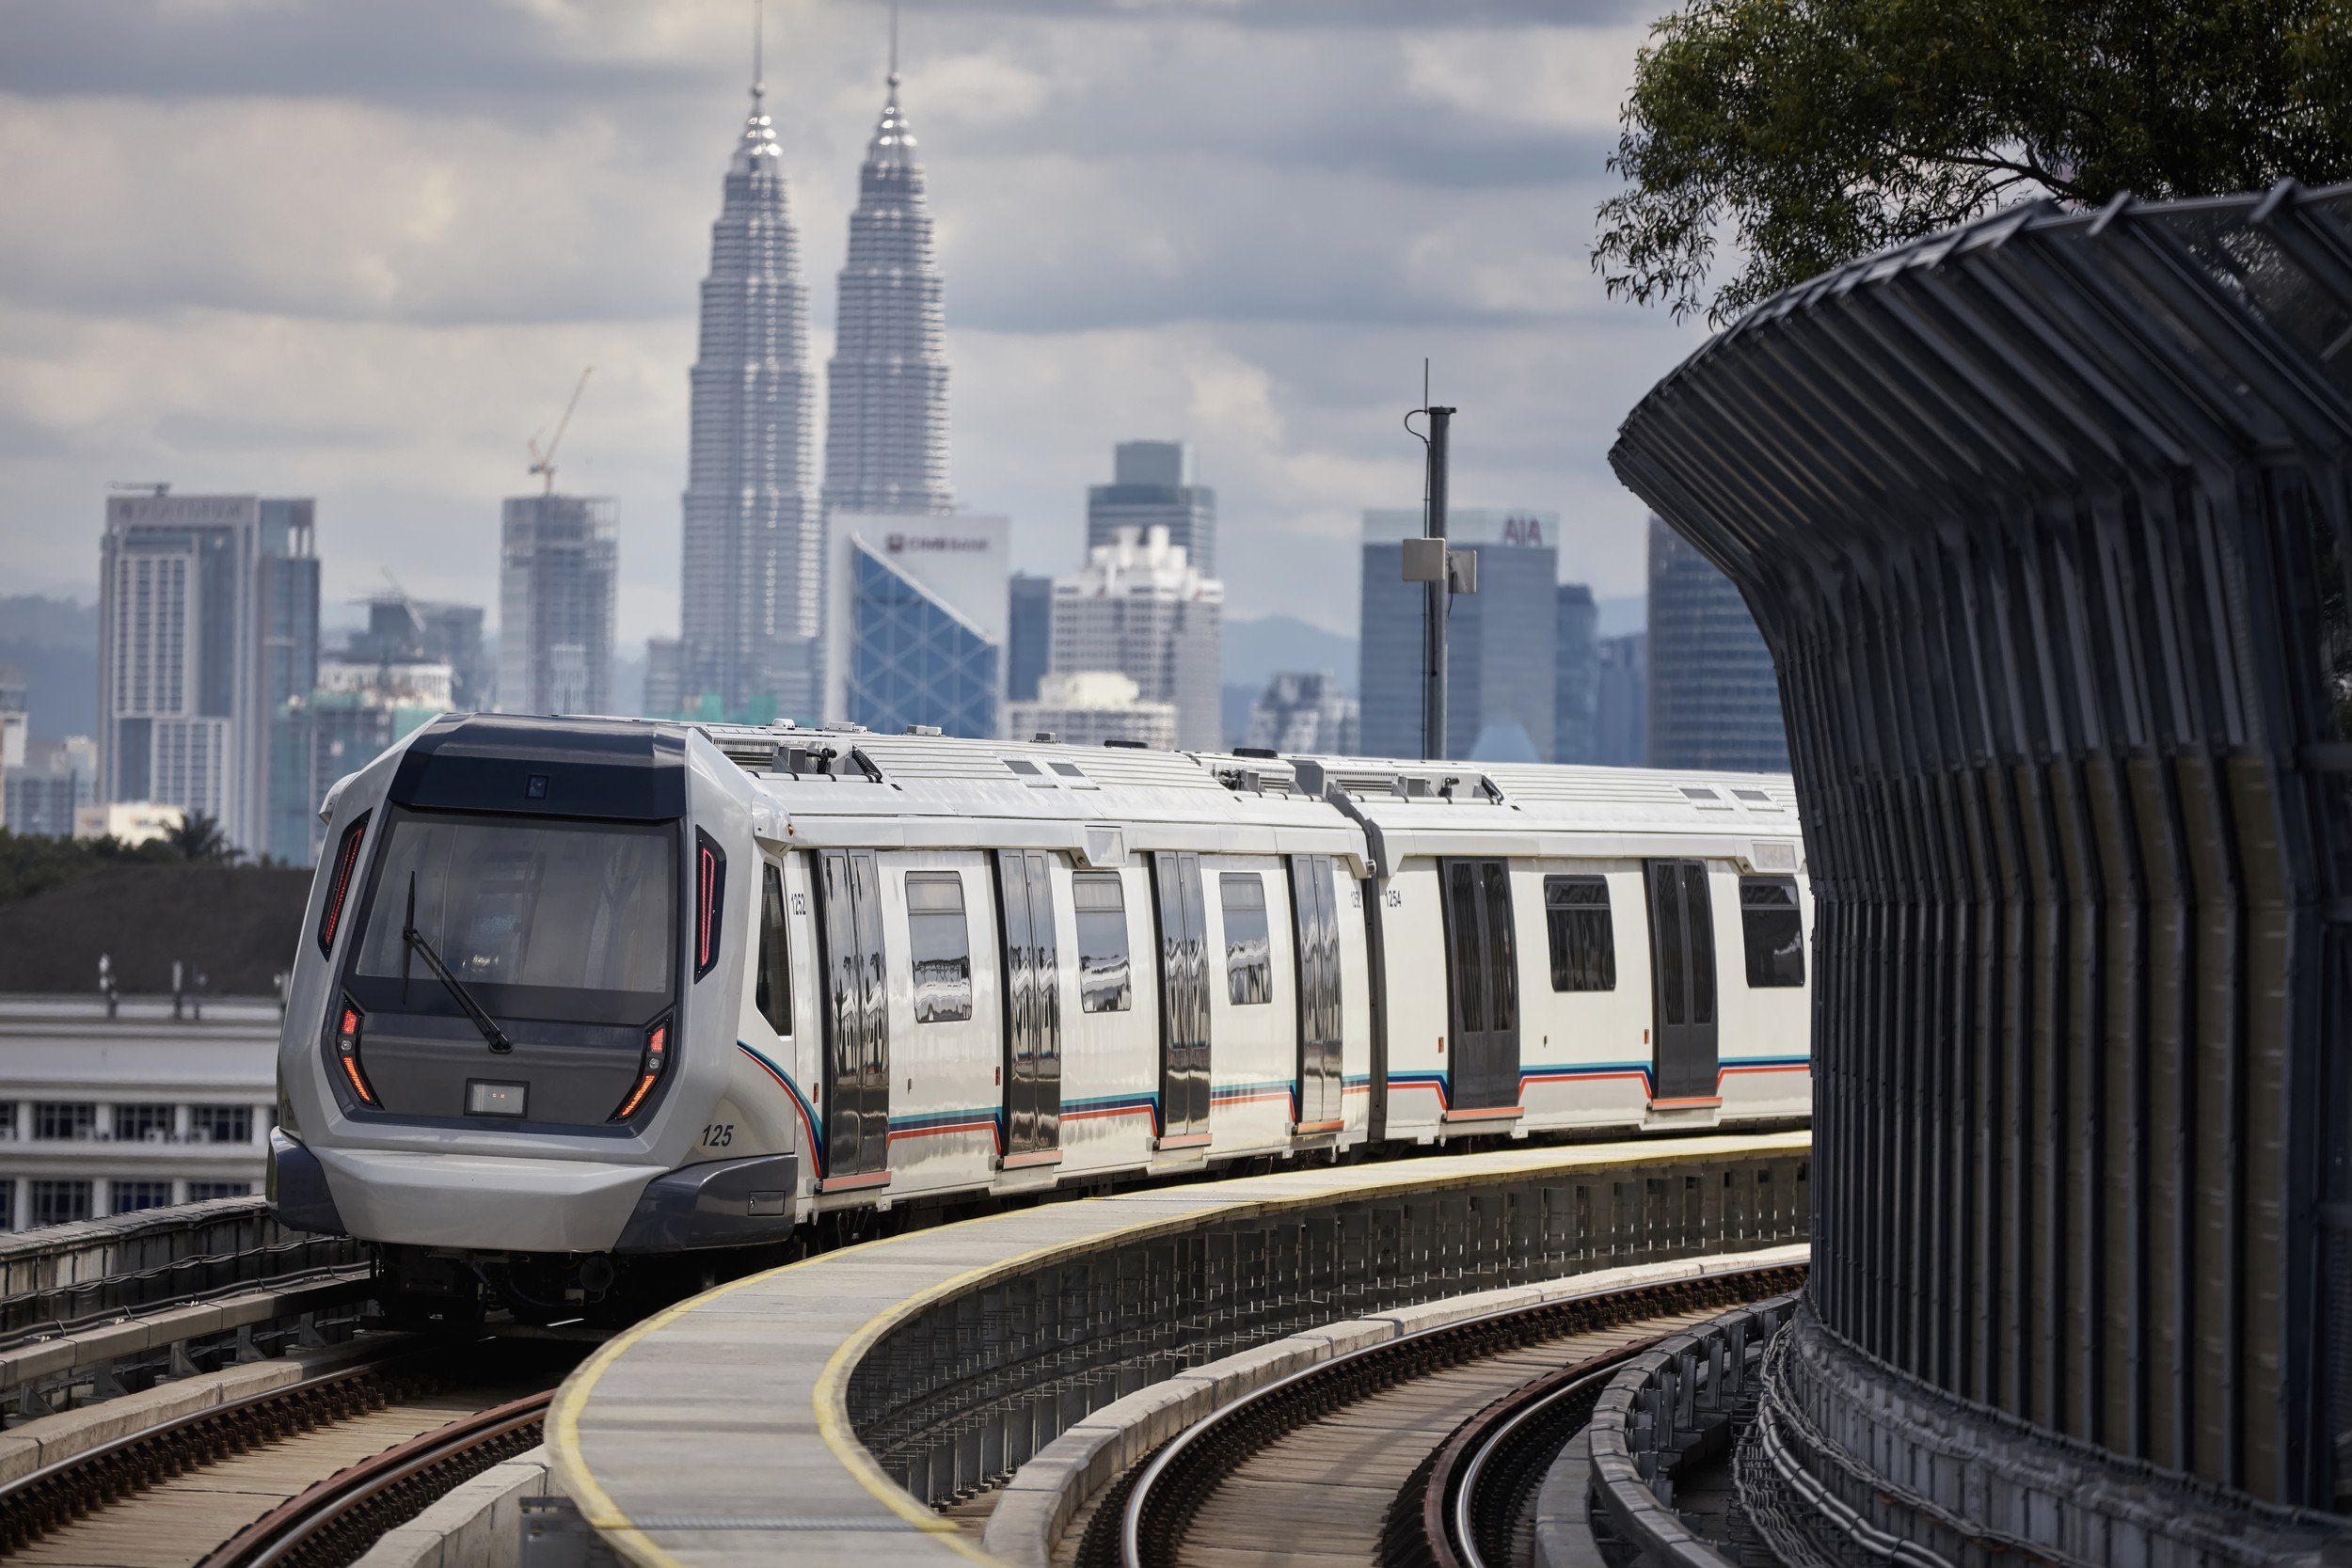 Sleek train in Kuala Lumpur showing off Malaysia's strong economic prosperity